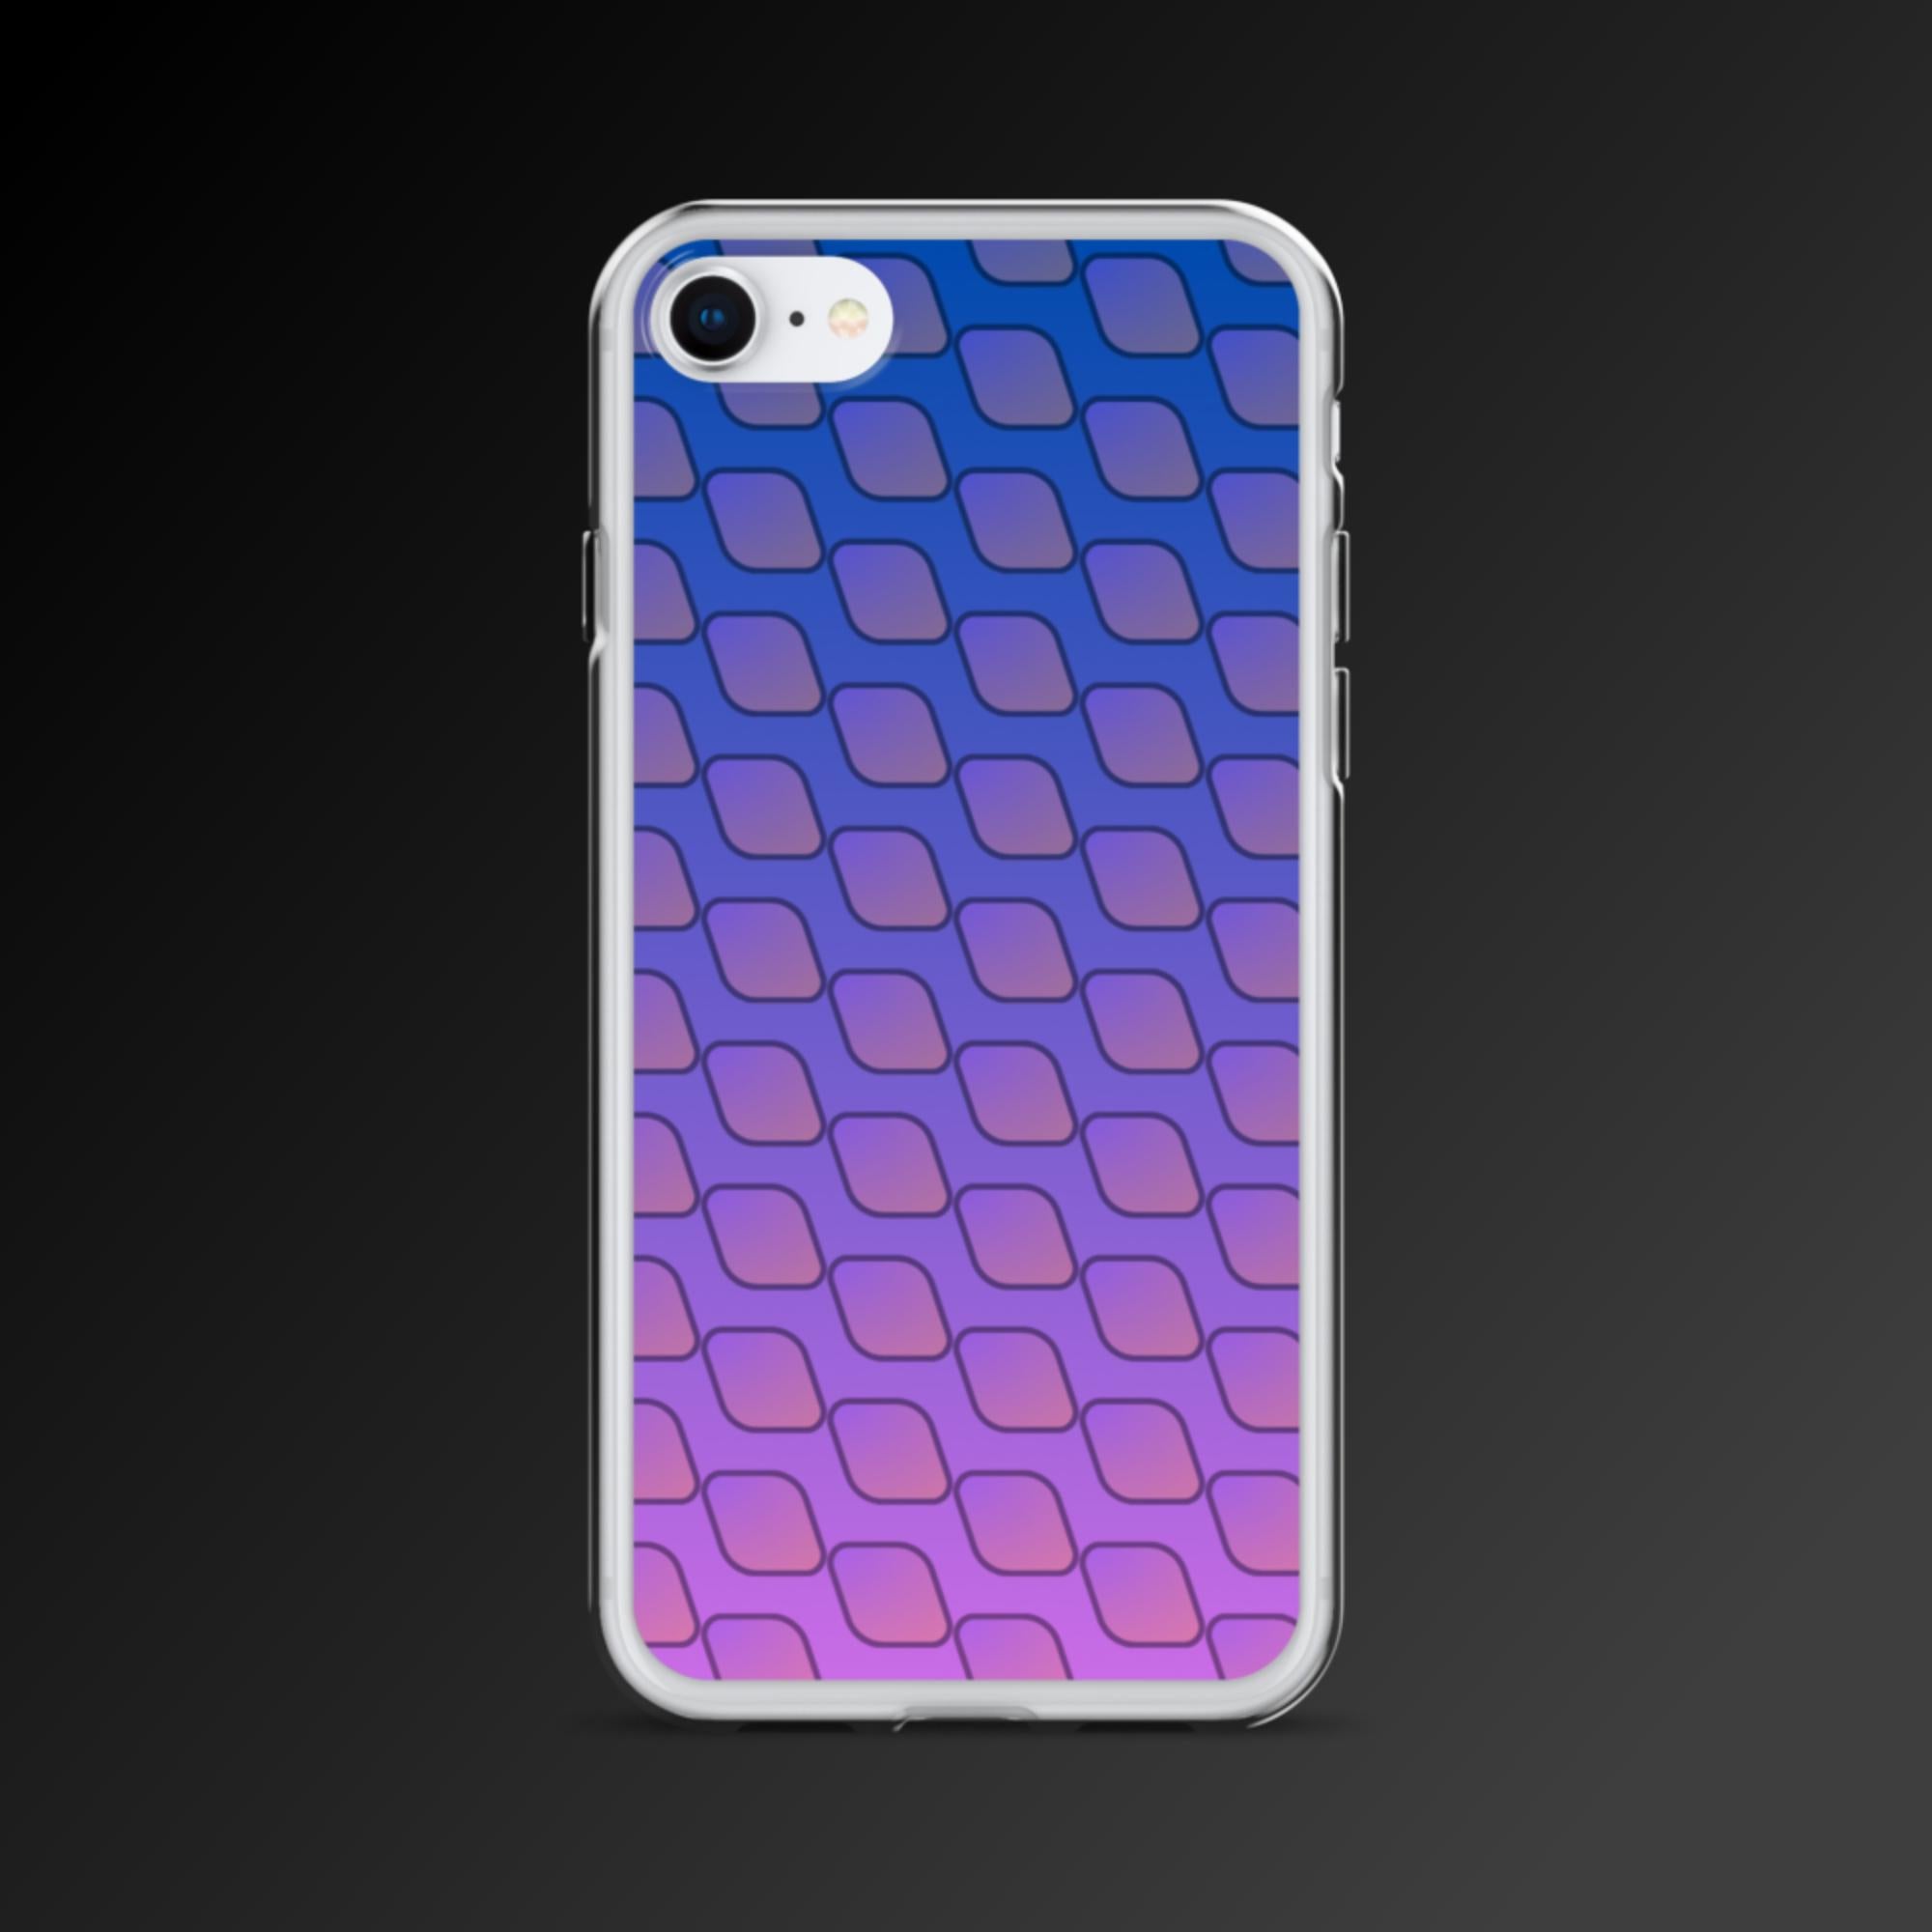 "Diamonds pattern" clear iphone case